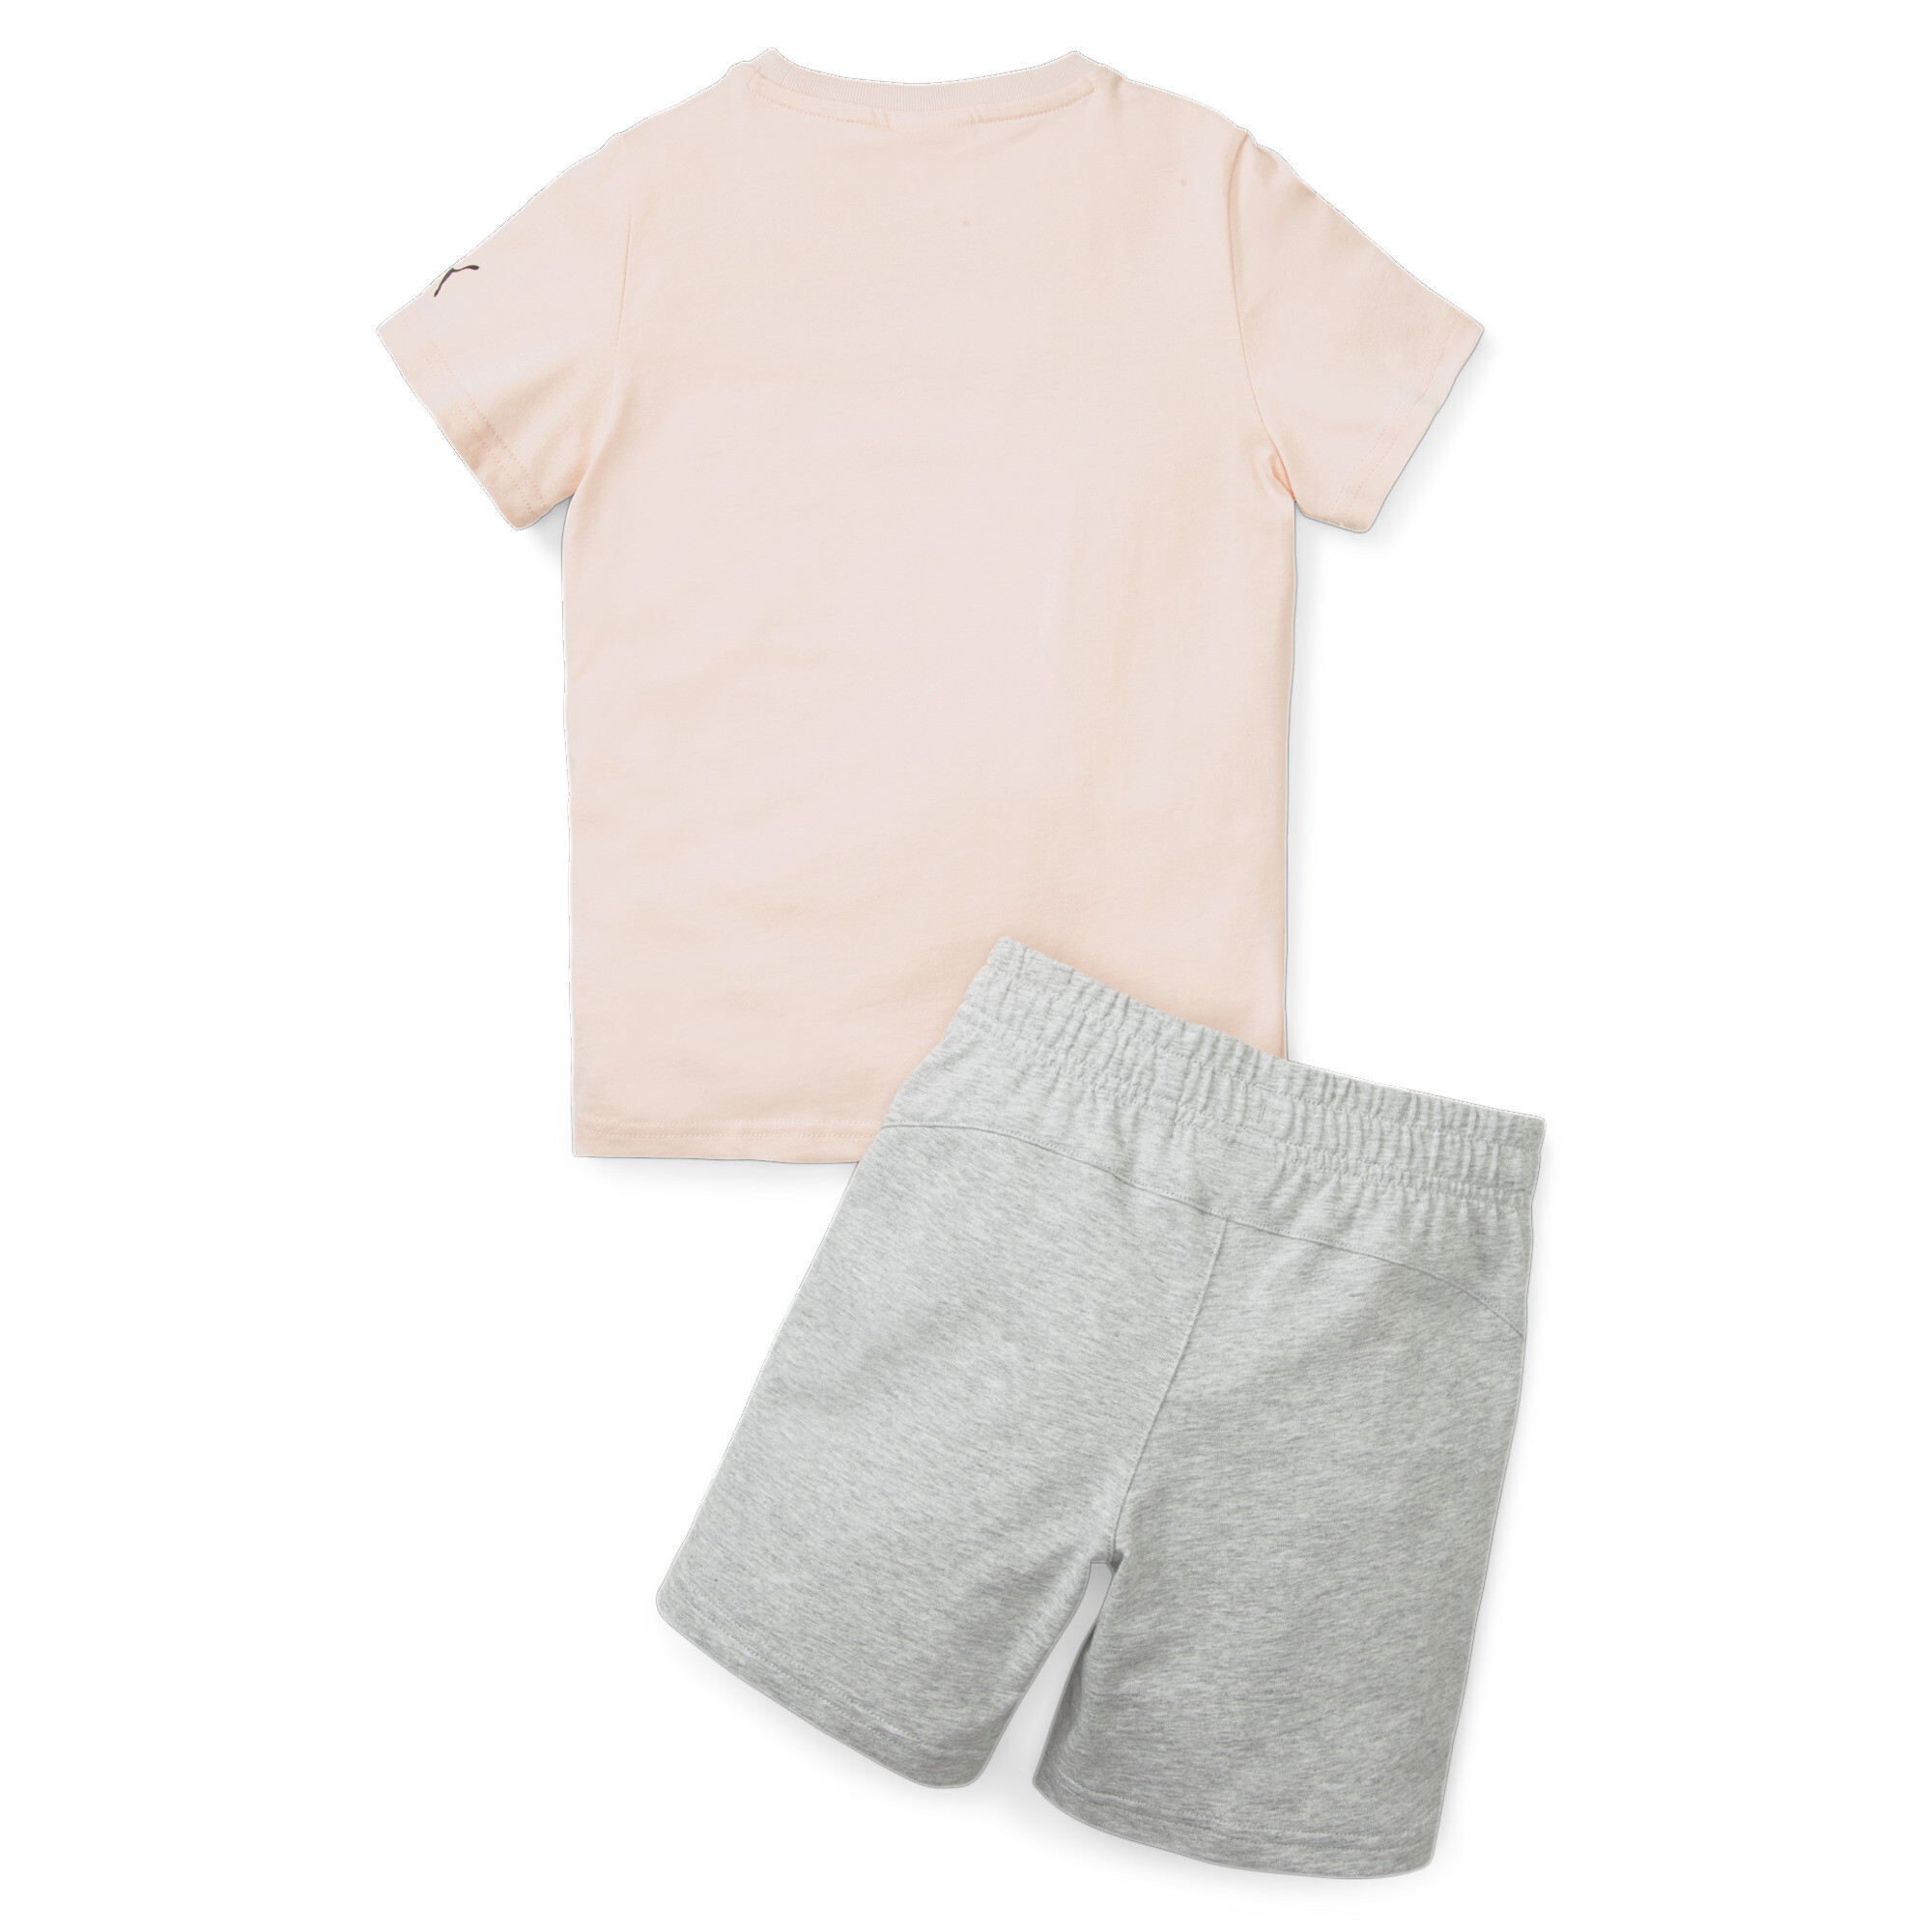 Puma X SPONGEBOB Tee And Shorts Set Kids, Pink, Size 2-3Y, Clothing